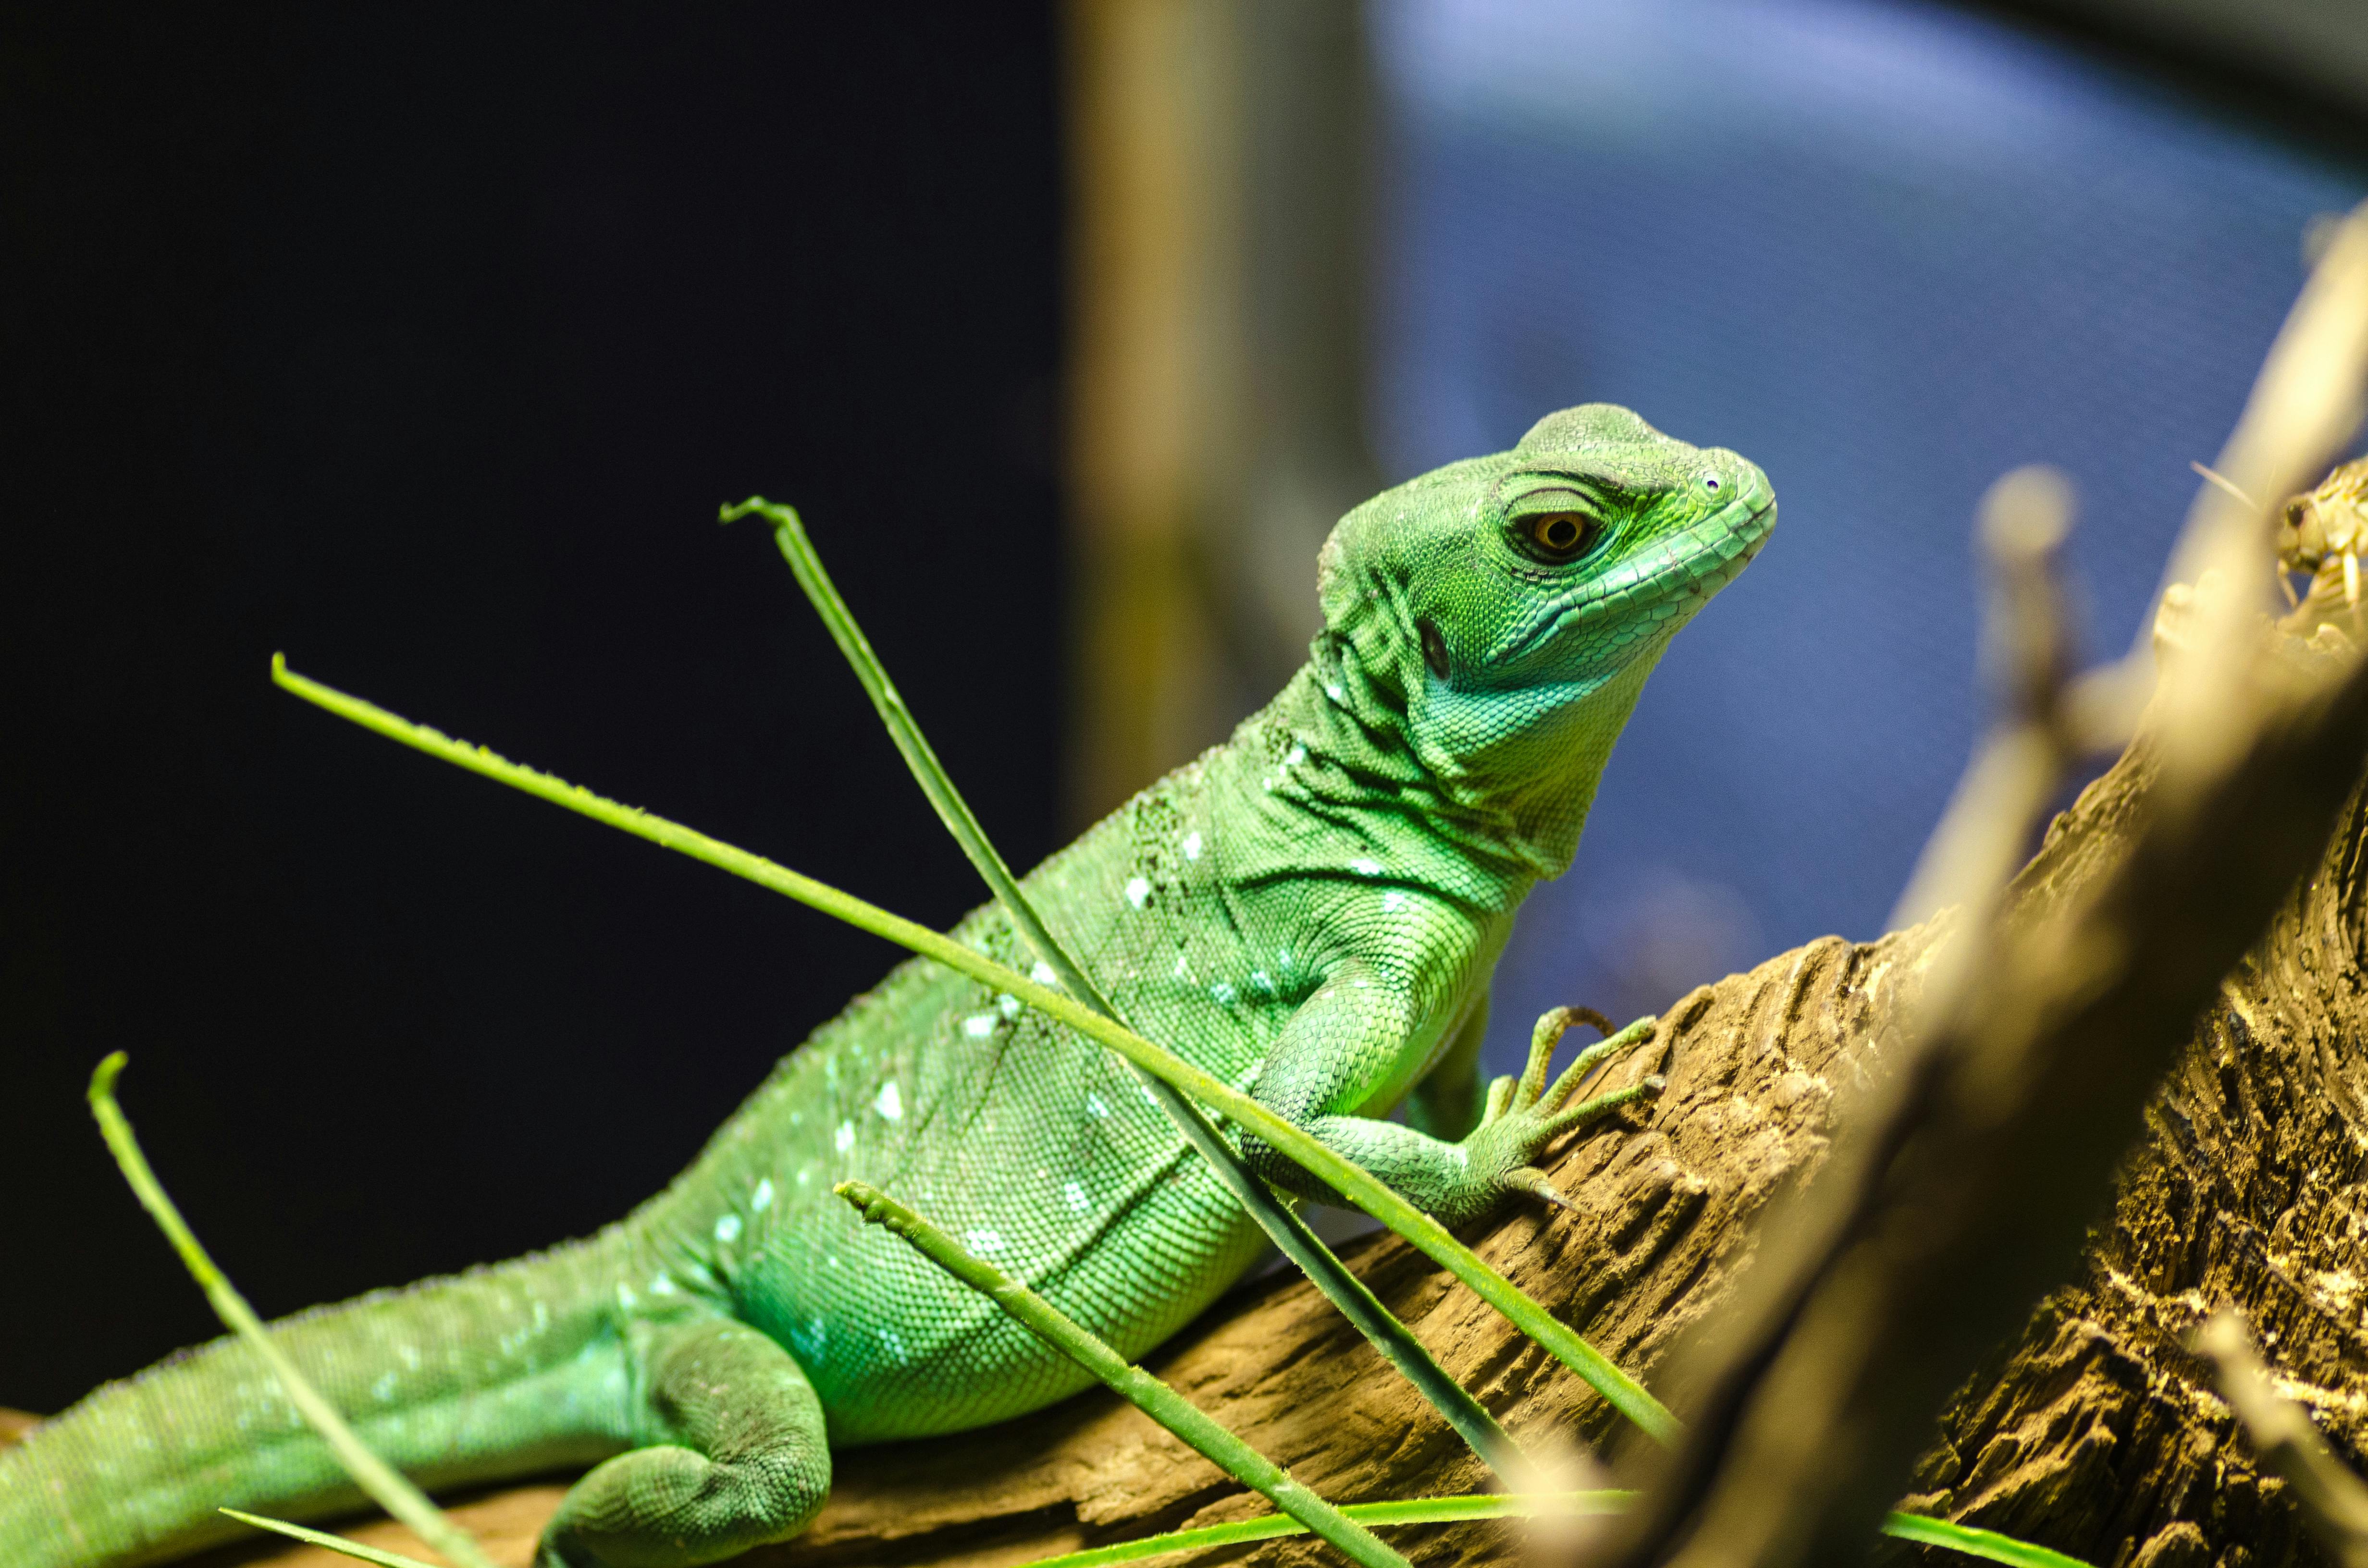 Green Lizard on Tree · Free Stock Photo